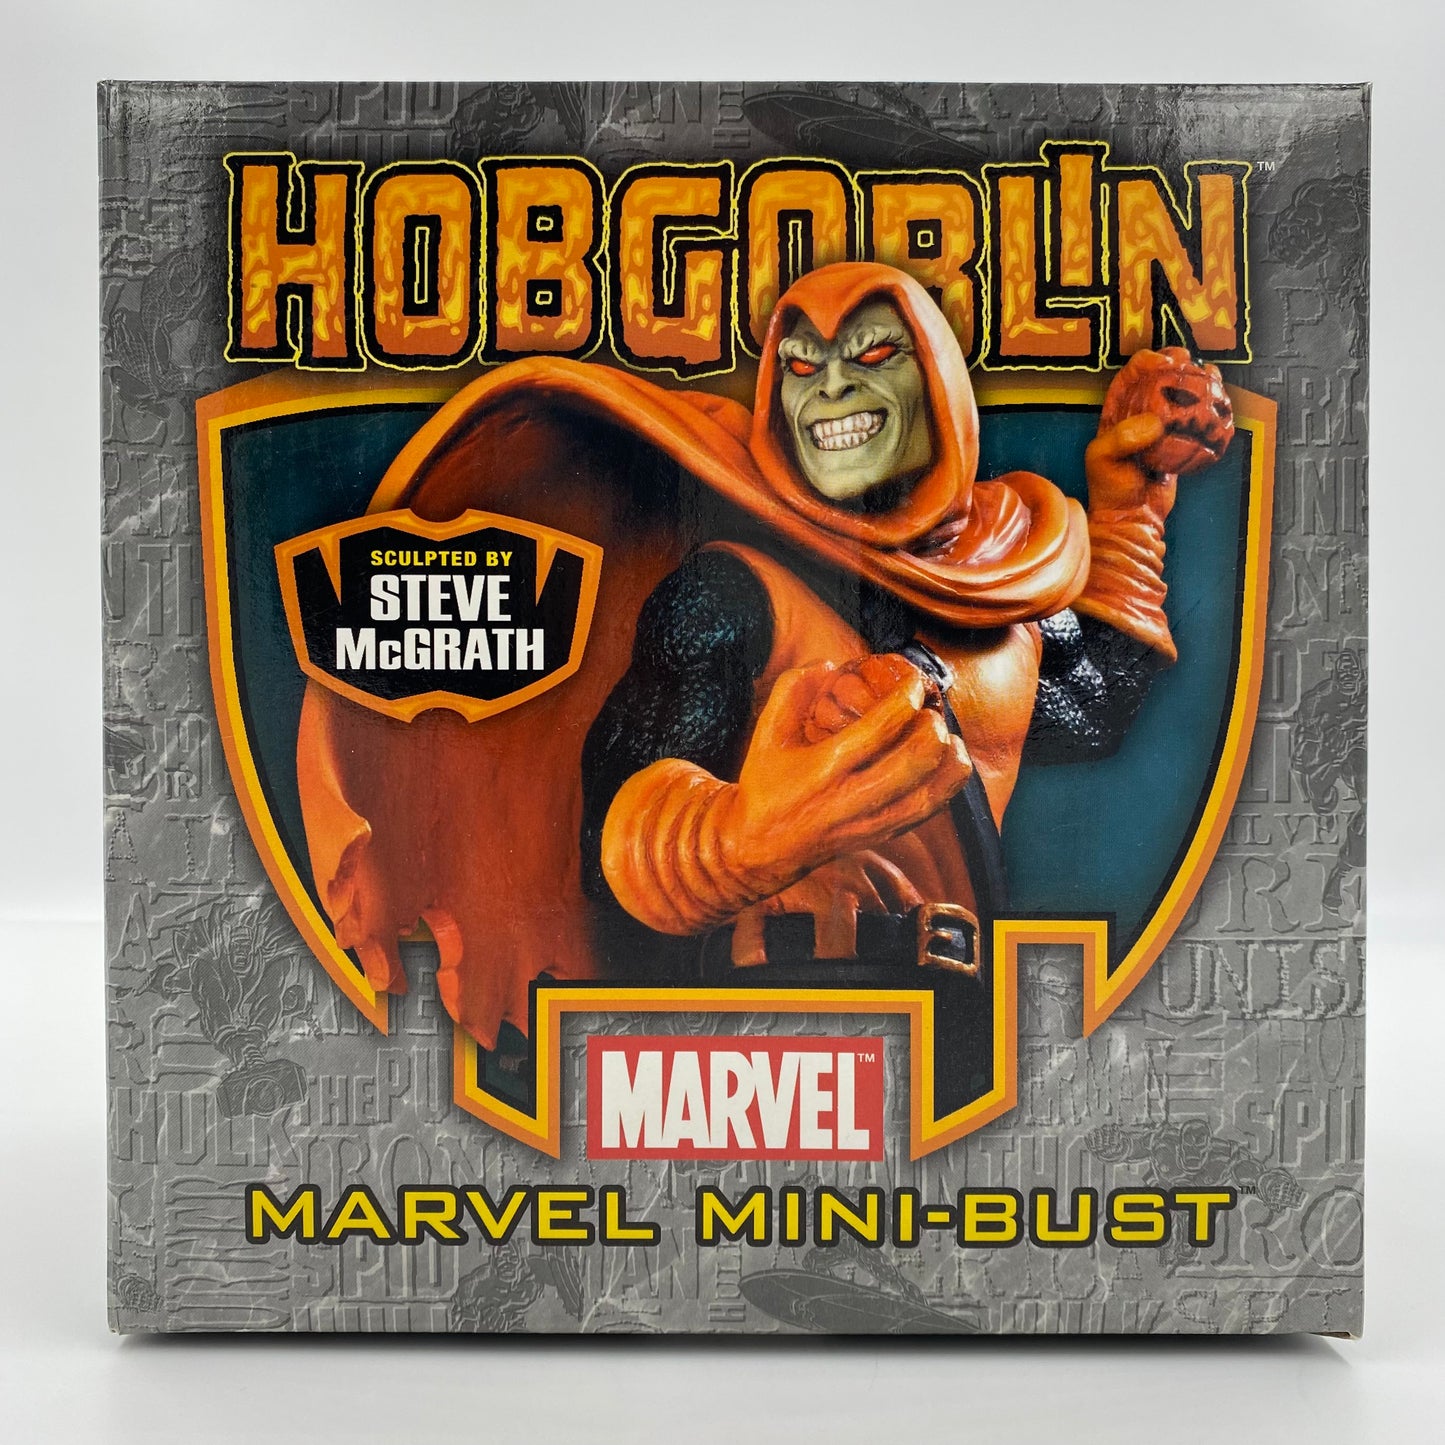 Hobgoblin Marvel mini-bust (2005) Bowen Designs